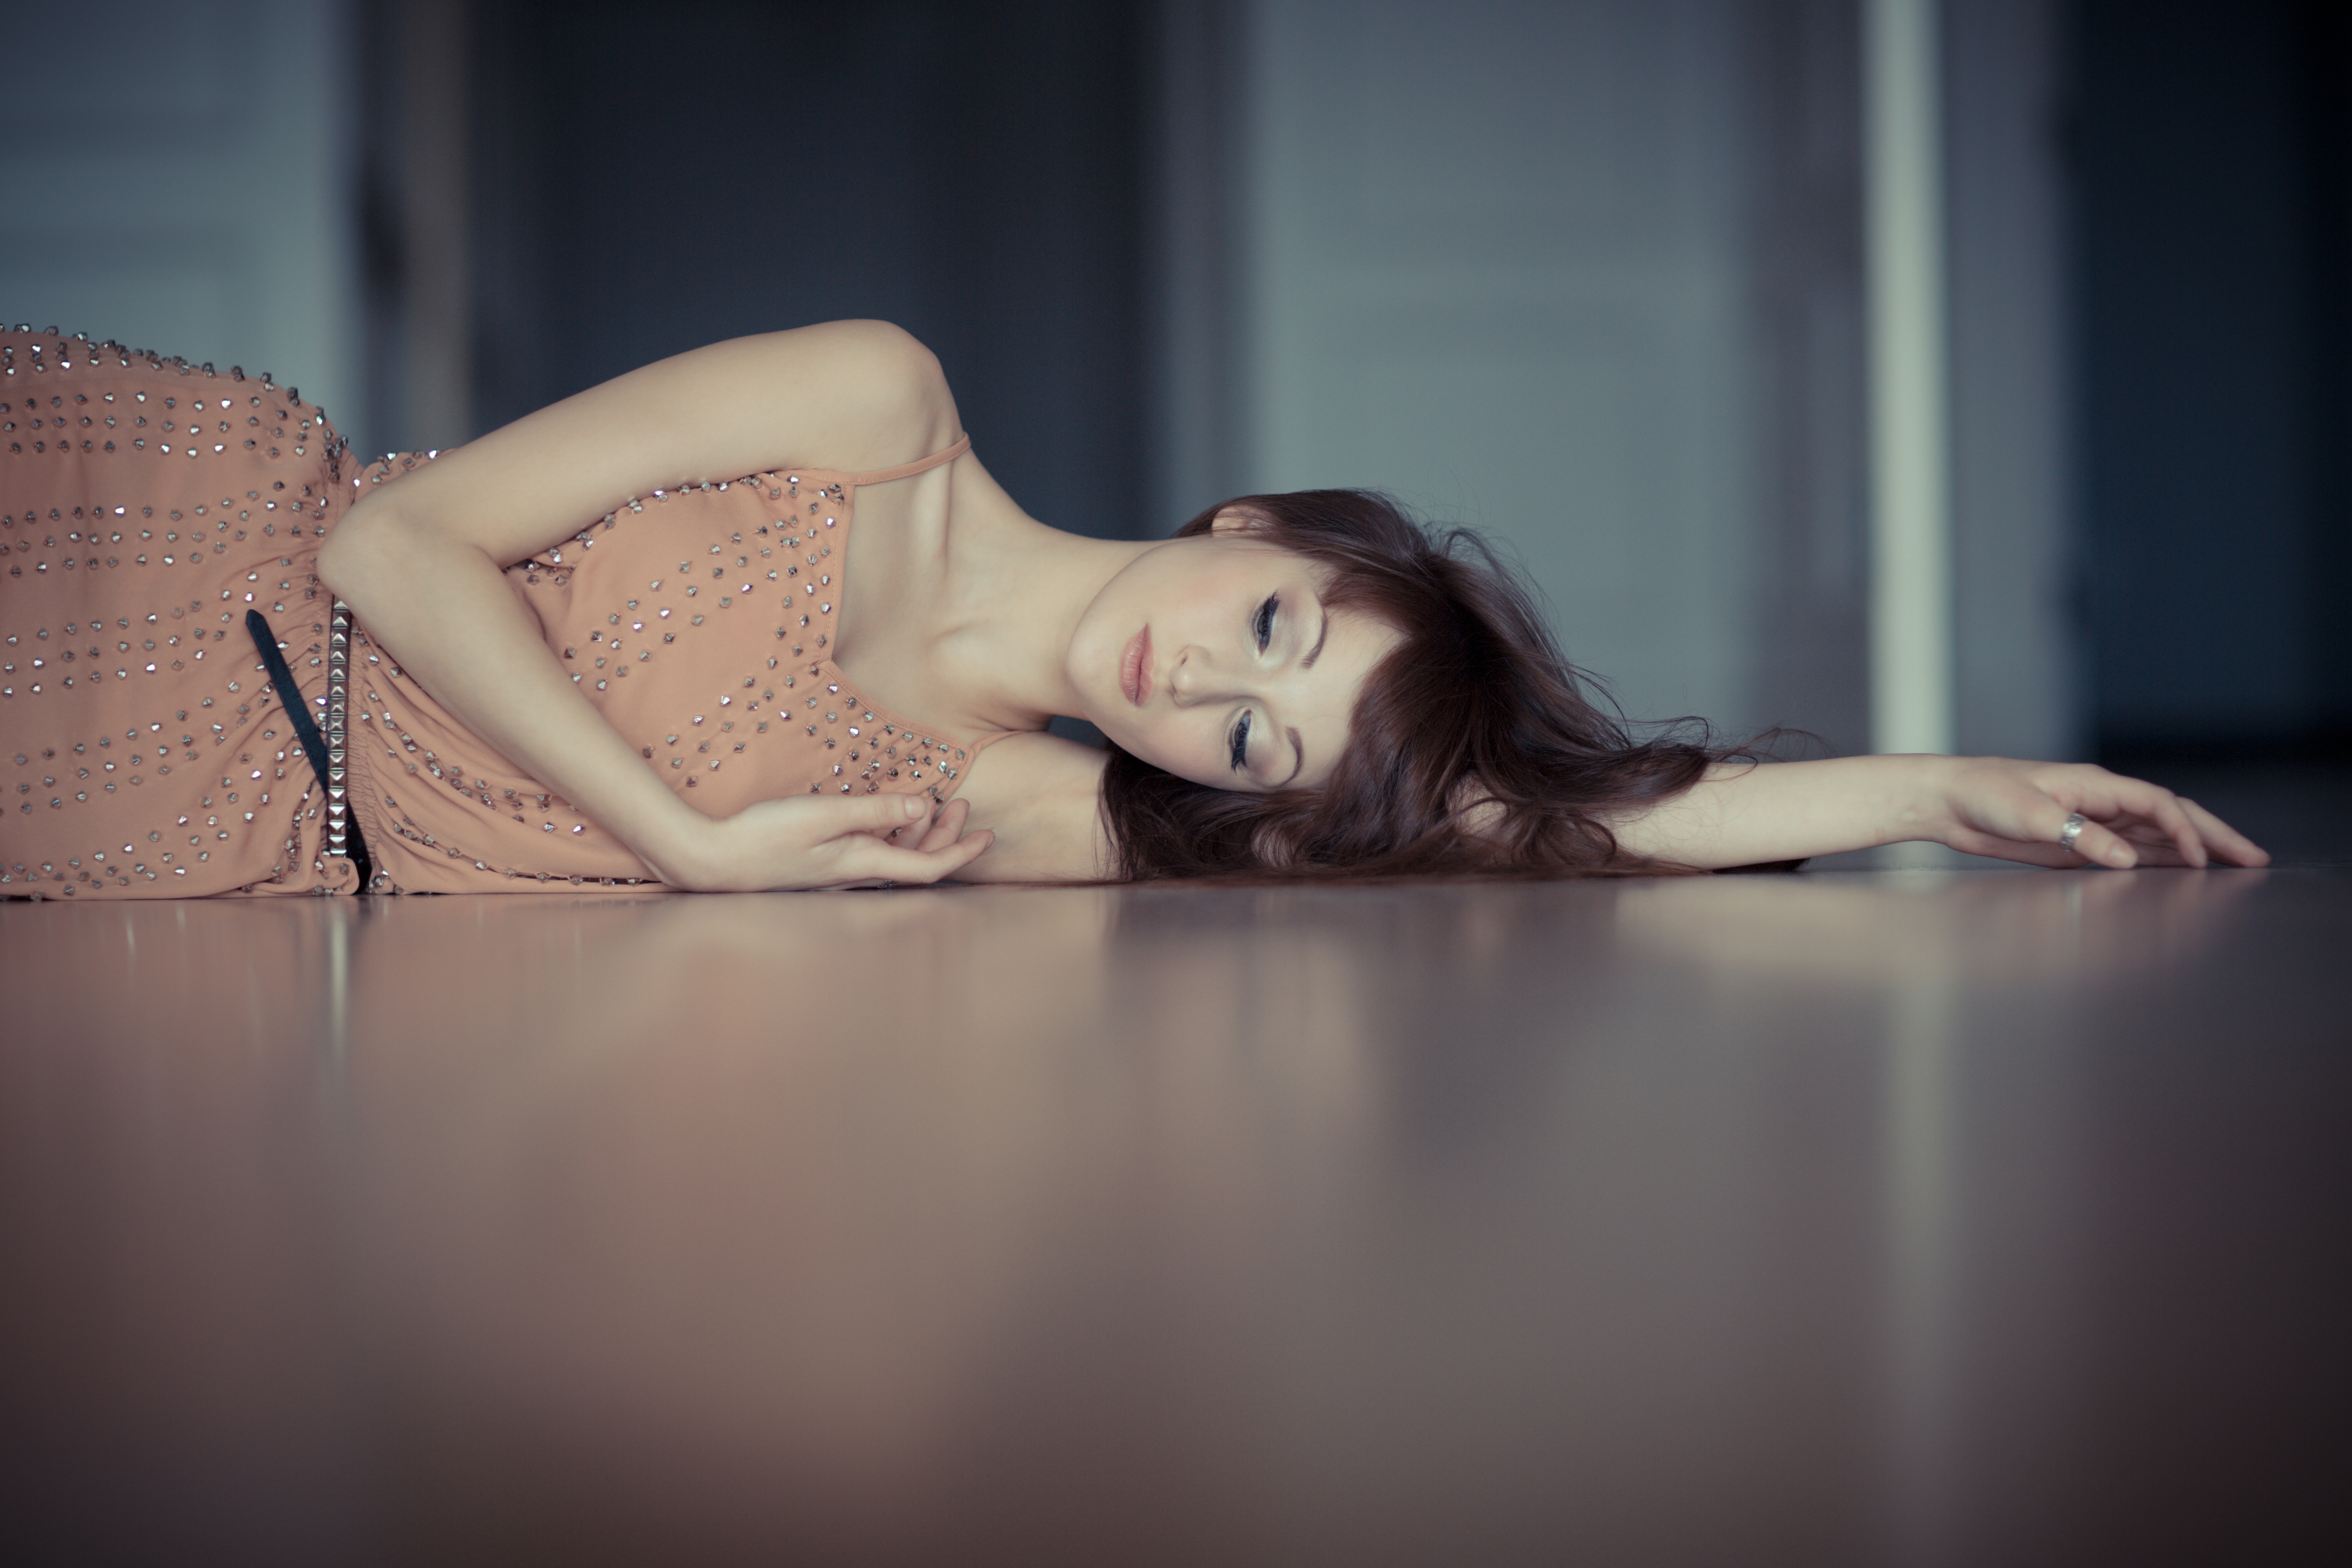 A woman lying on the floor. | Source: Unsplash